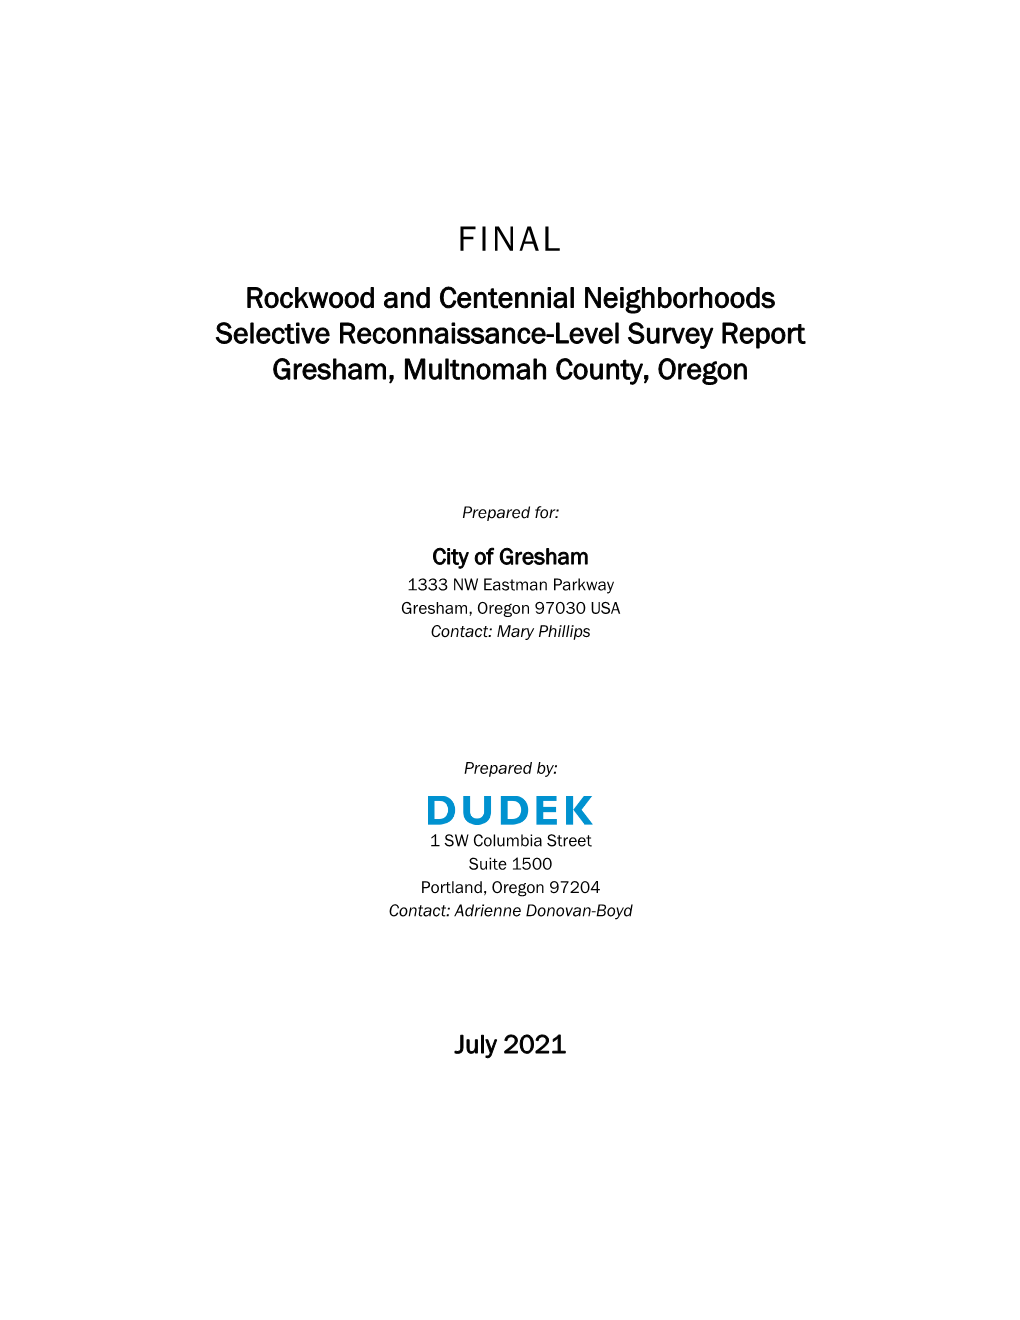 Rockwood and Cenetnnial Survey Report